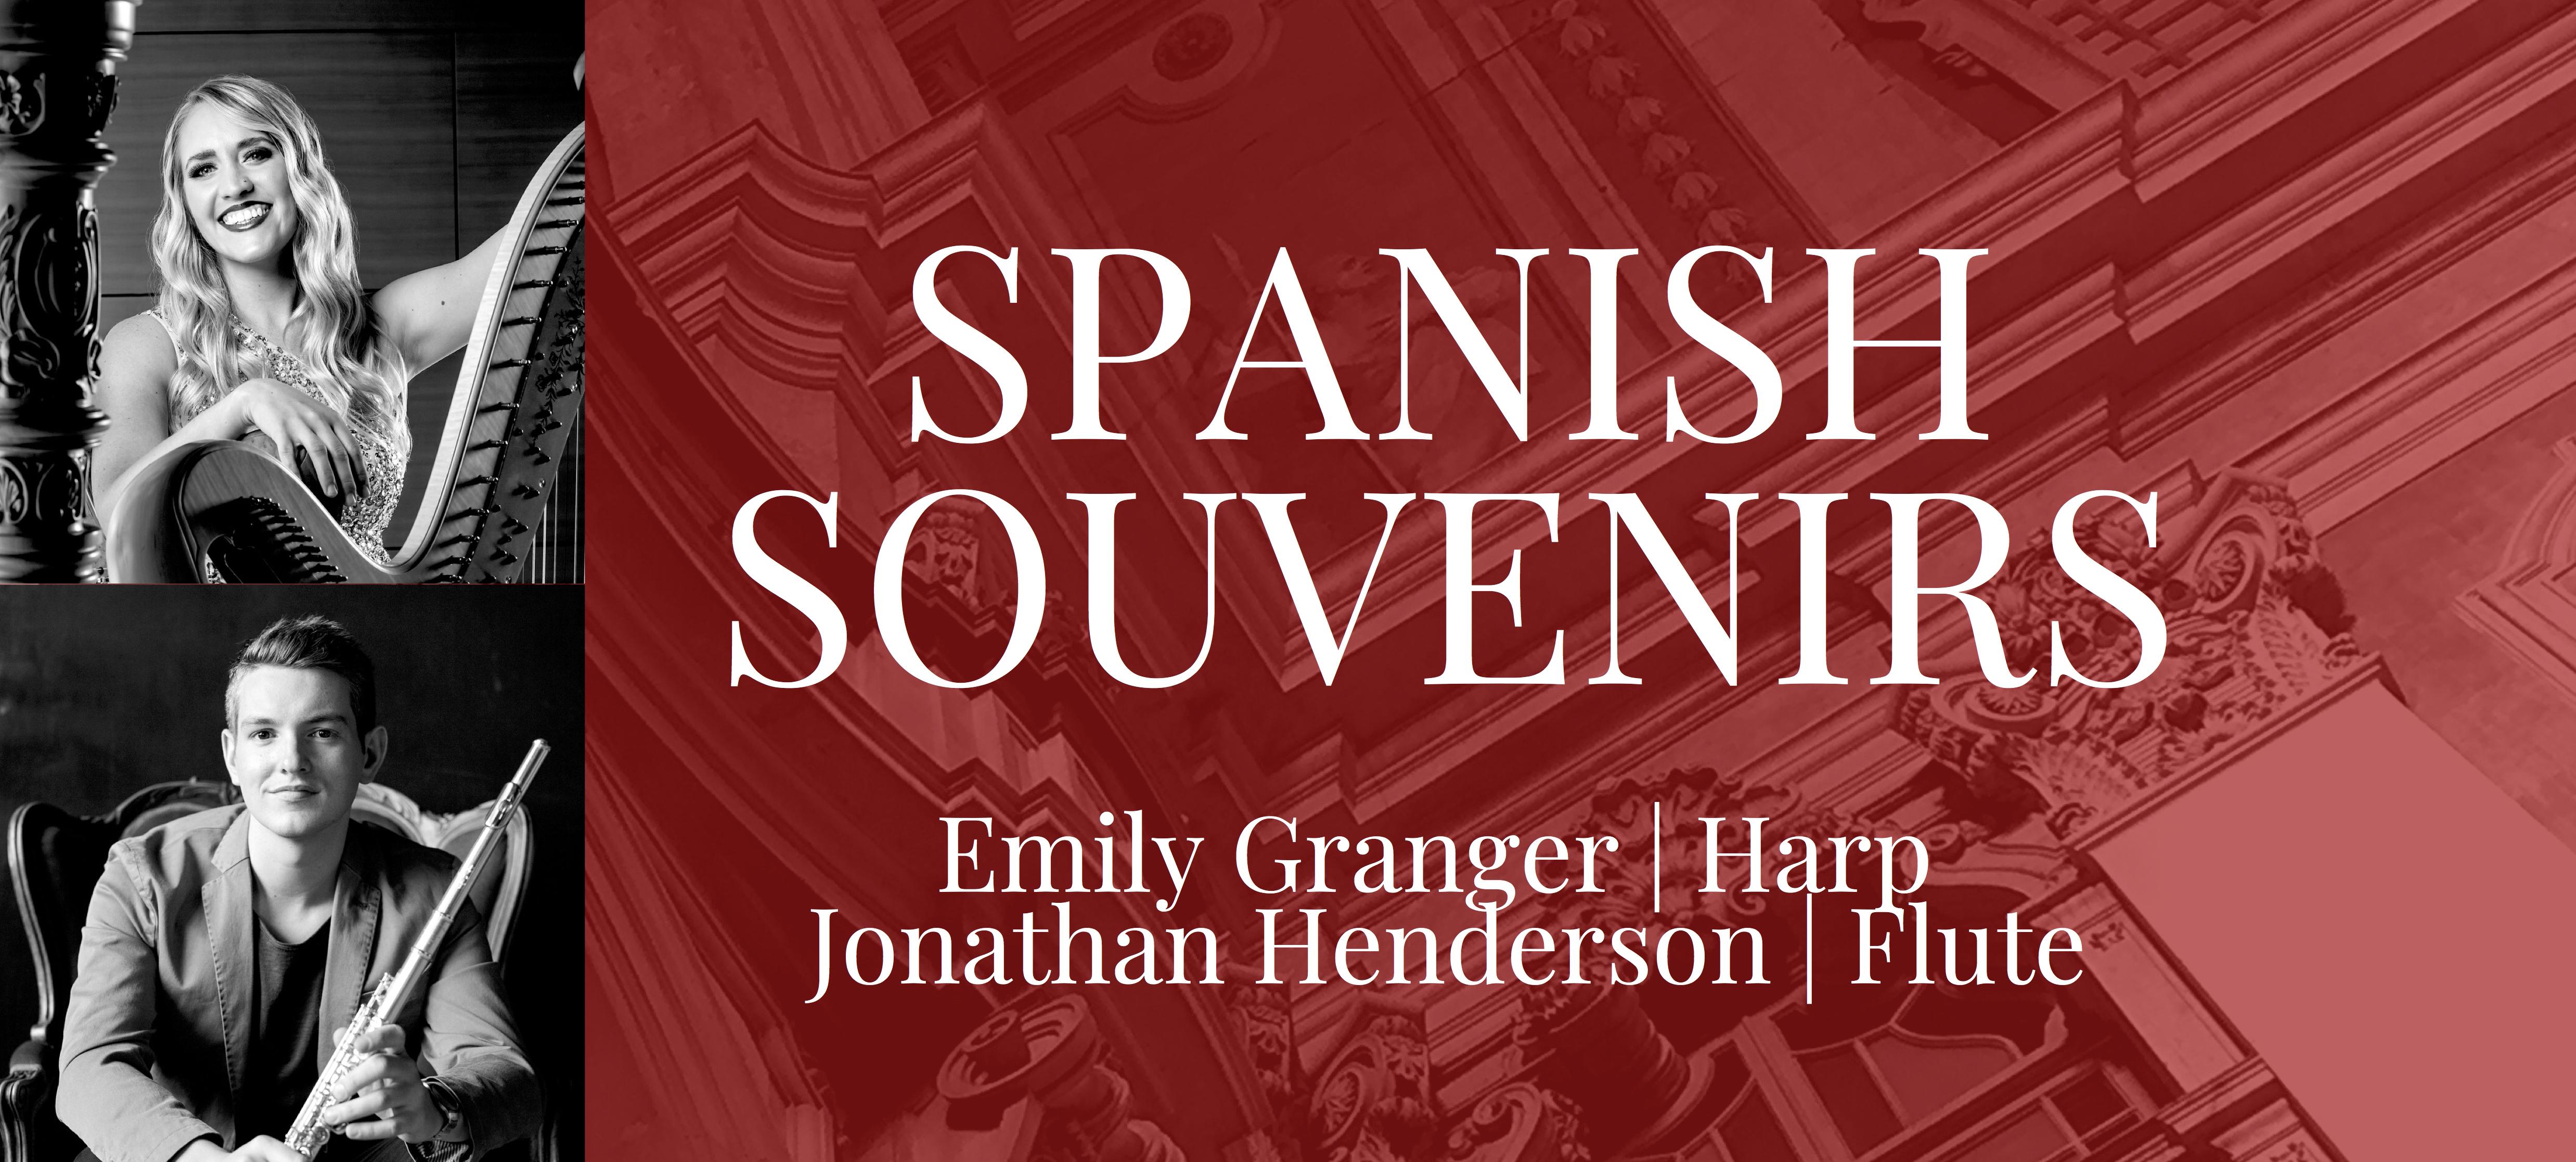 SPANISH SOUVENIRS: Emily Granger & Jonathan Henderson / Ashfield (Sydney)